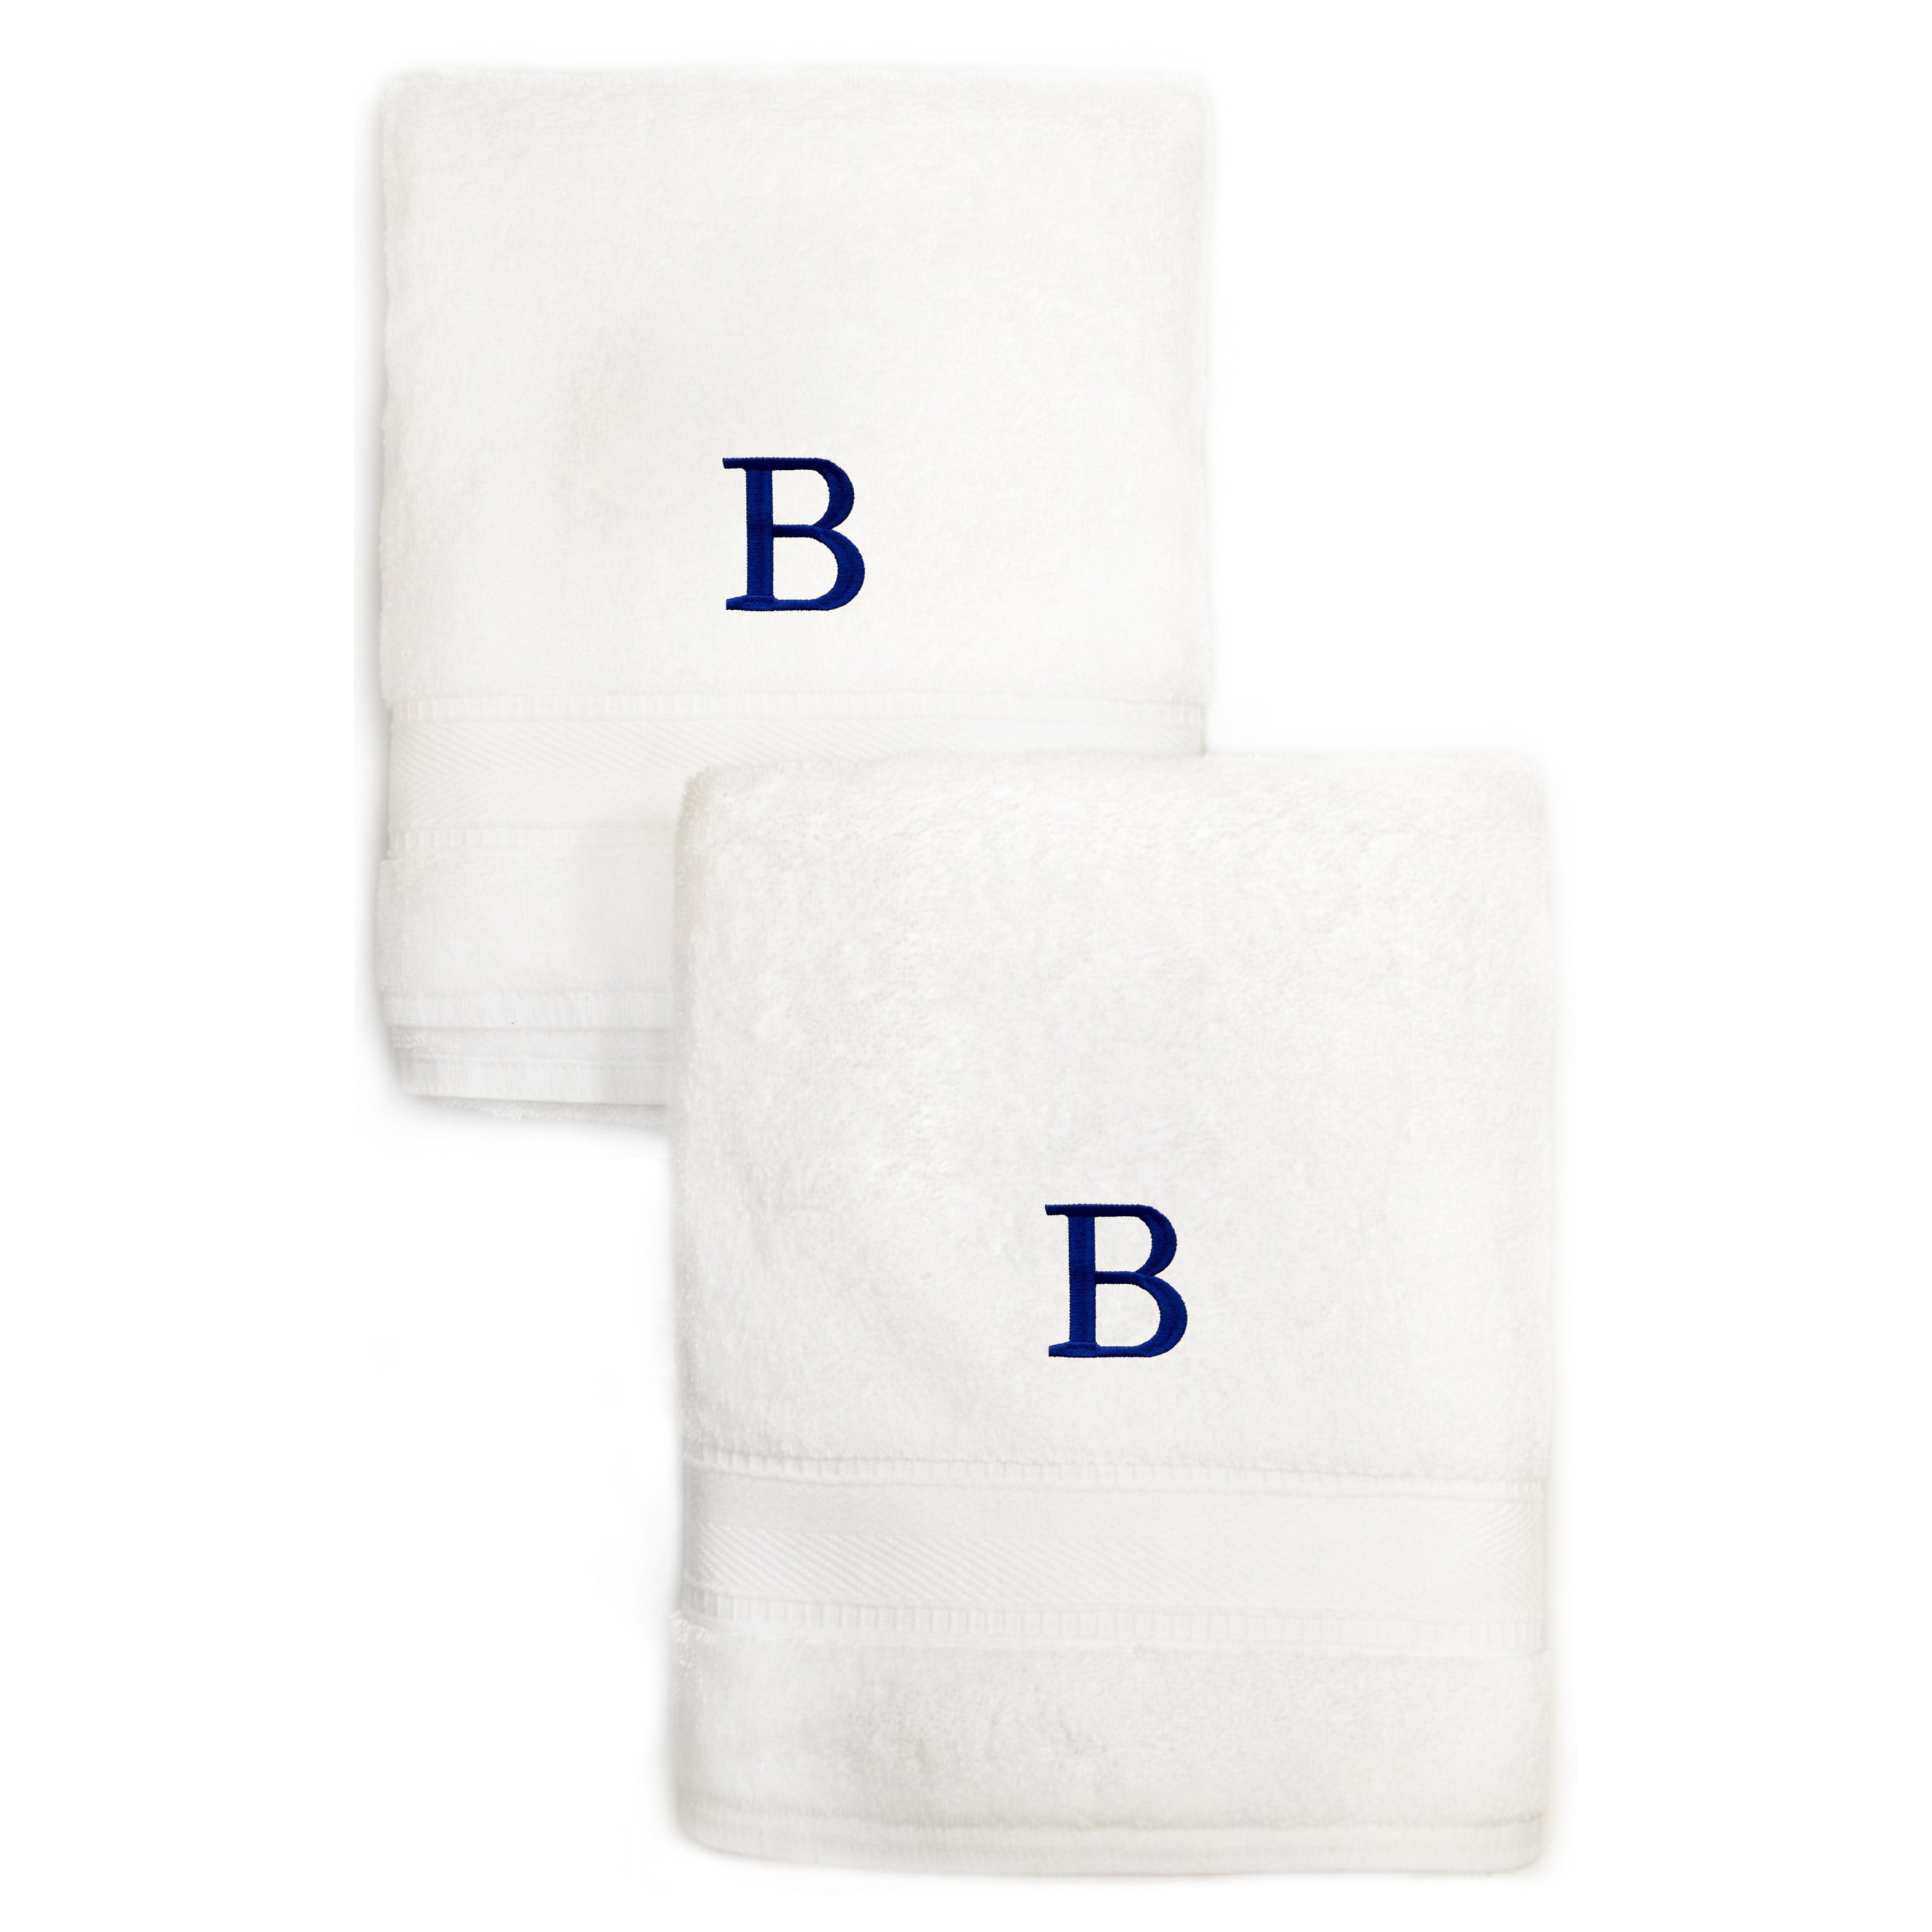 Avanti Towel Set WHT/SIL PRE SCRIPT MONOGRAM "J" 3PC B/H/FT by Avanti Linens 